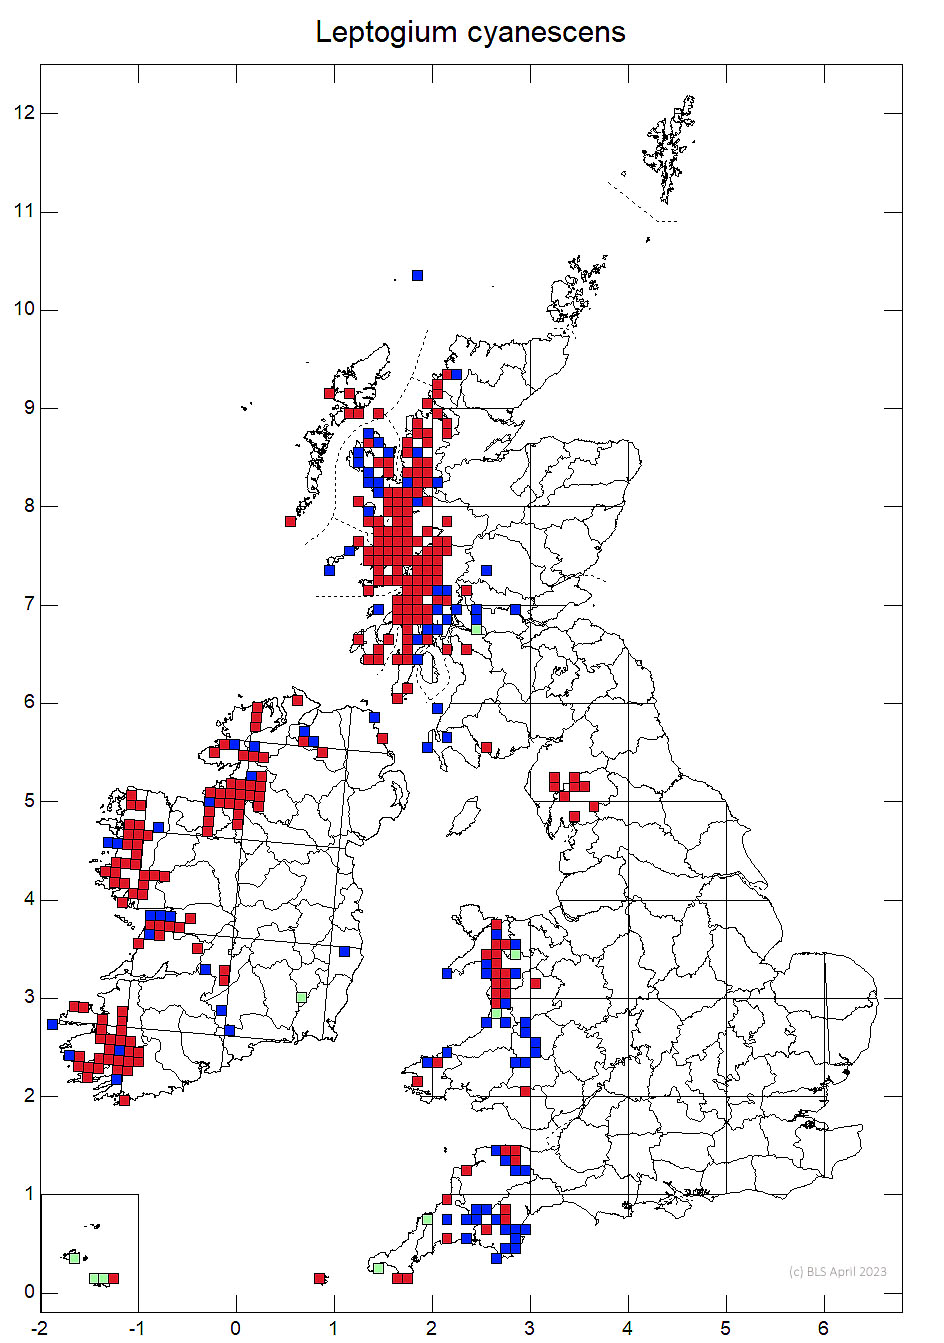 Leptogium cyanescens 10km sq distribution map